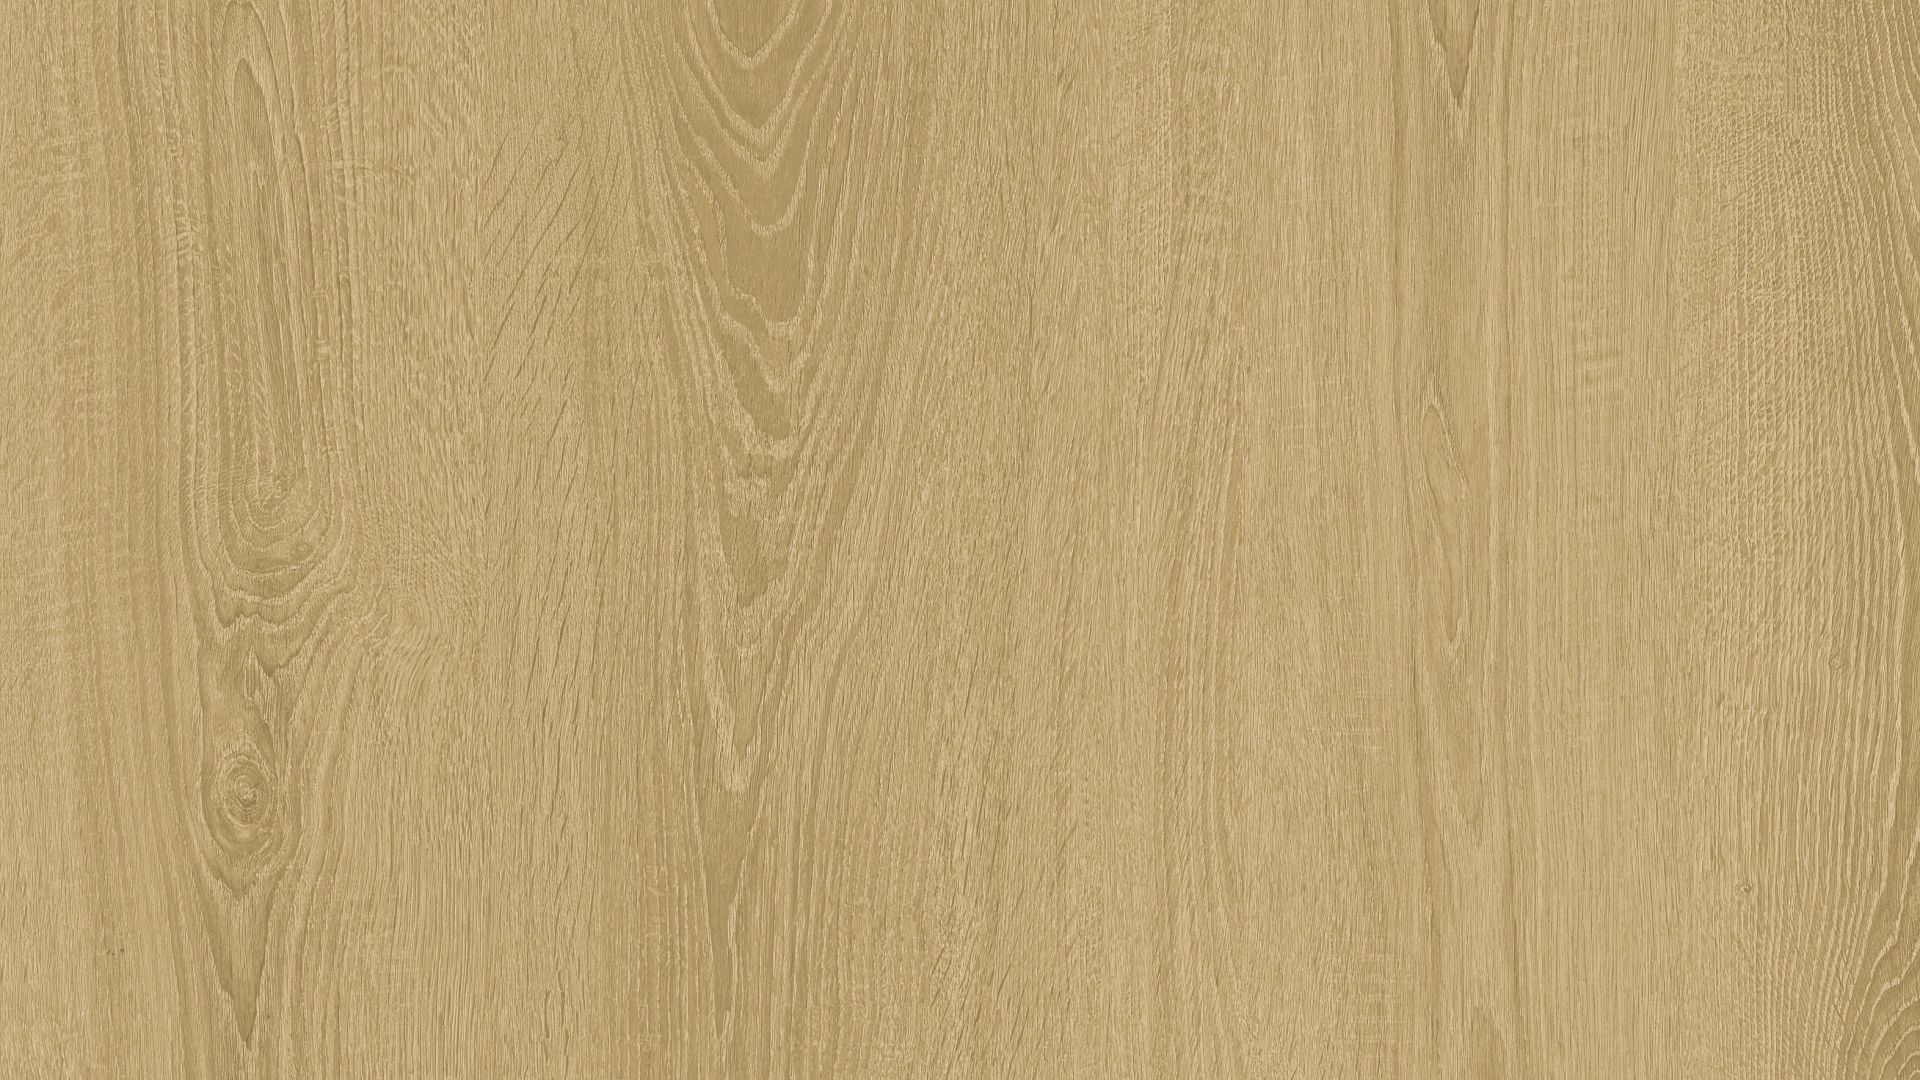 Elegance Oak 76 EVP Vinyl Flooring Product Shot